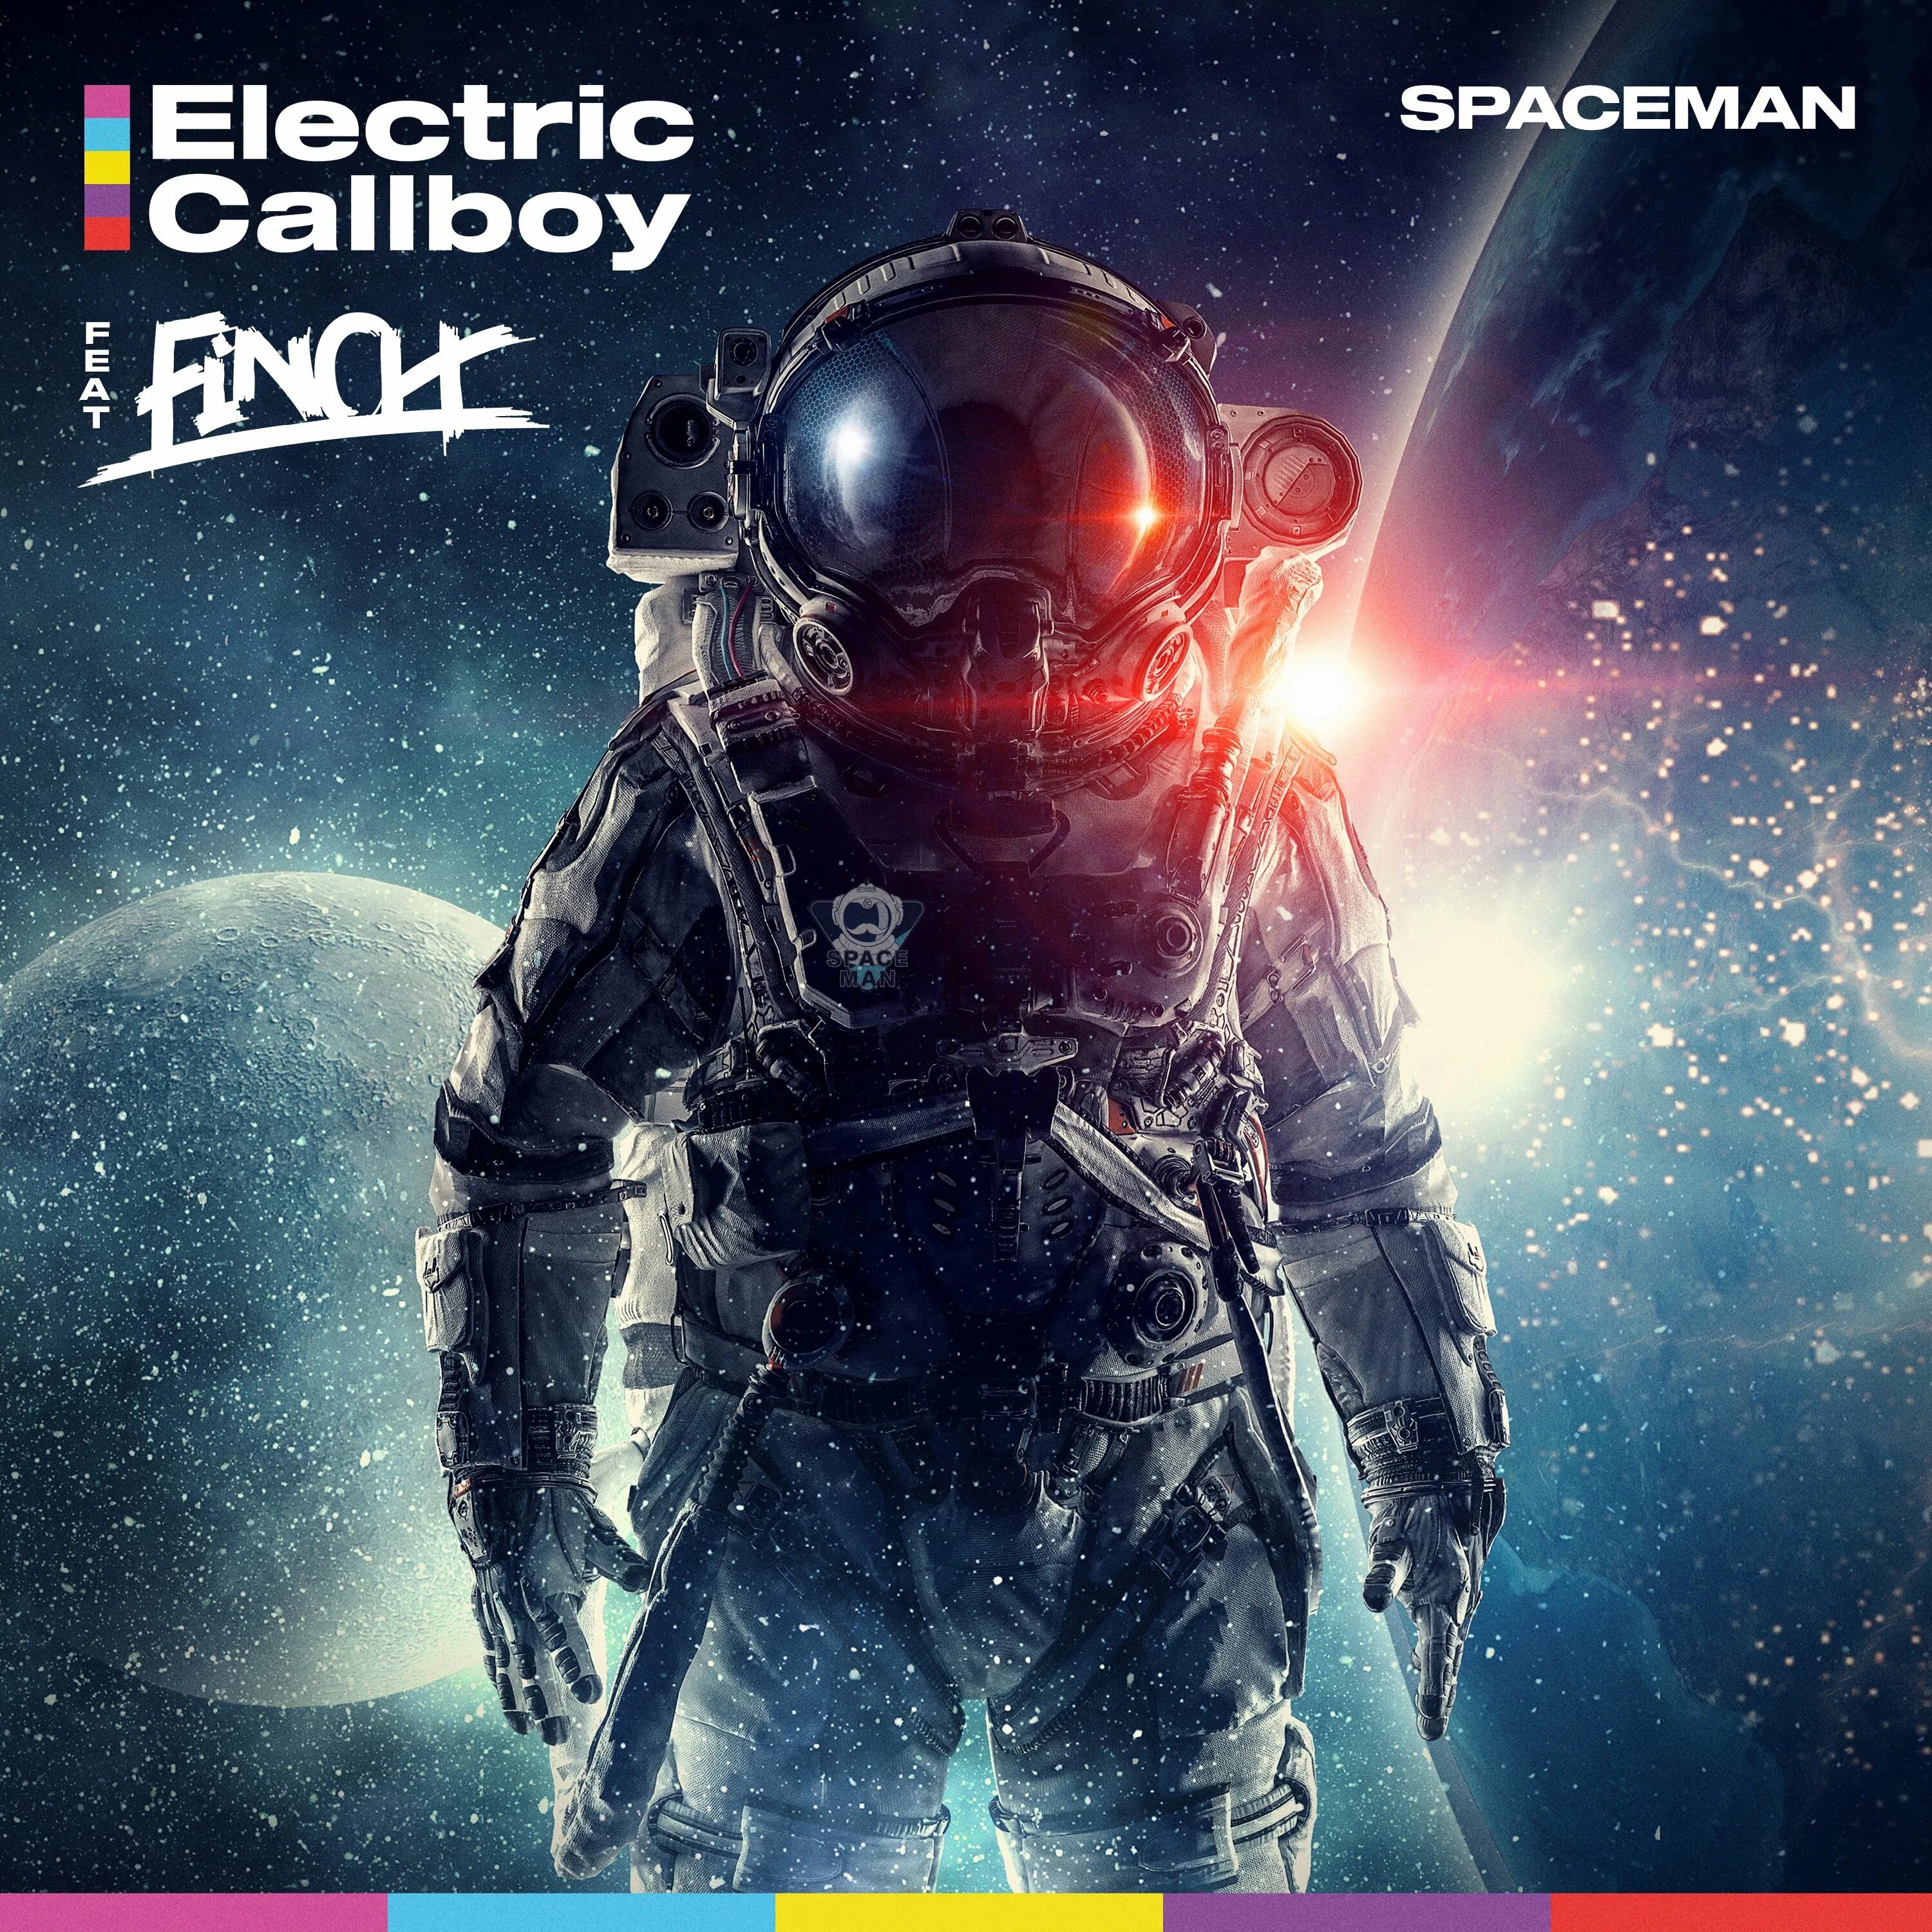 Spaceman перевод. Electric Callboy Spaceman. Electric Callboy 2022. Electric Callboy - Spaceman (feat. Finch). Electric Callboy обложка.